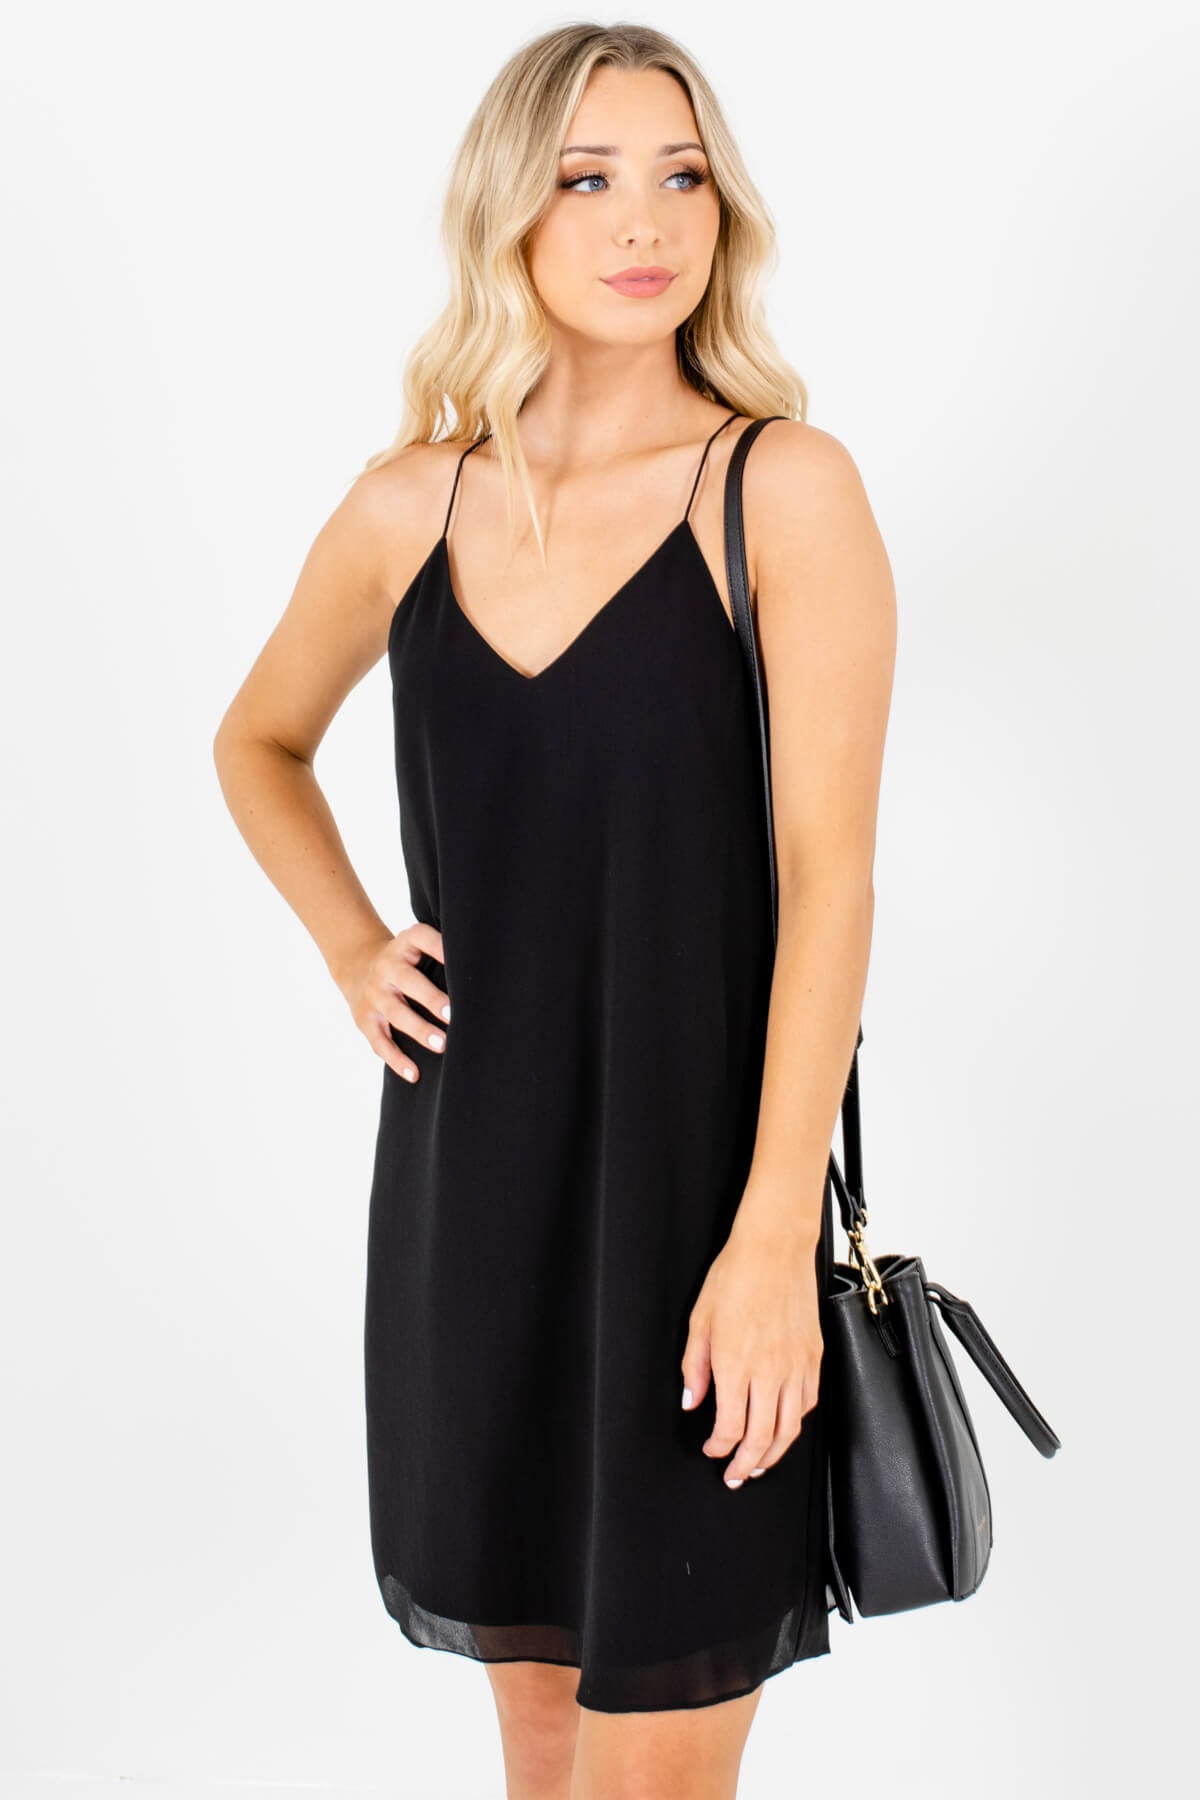 Women's Black Tank Style Boutique Mini Dress